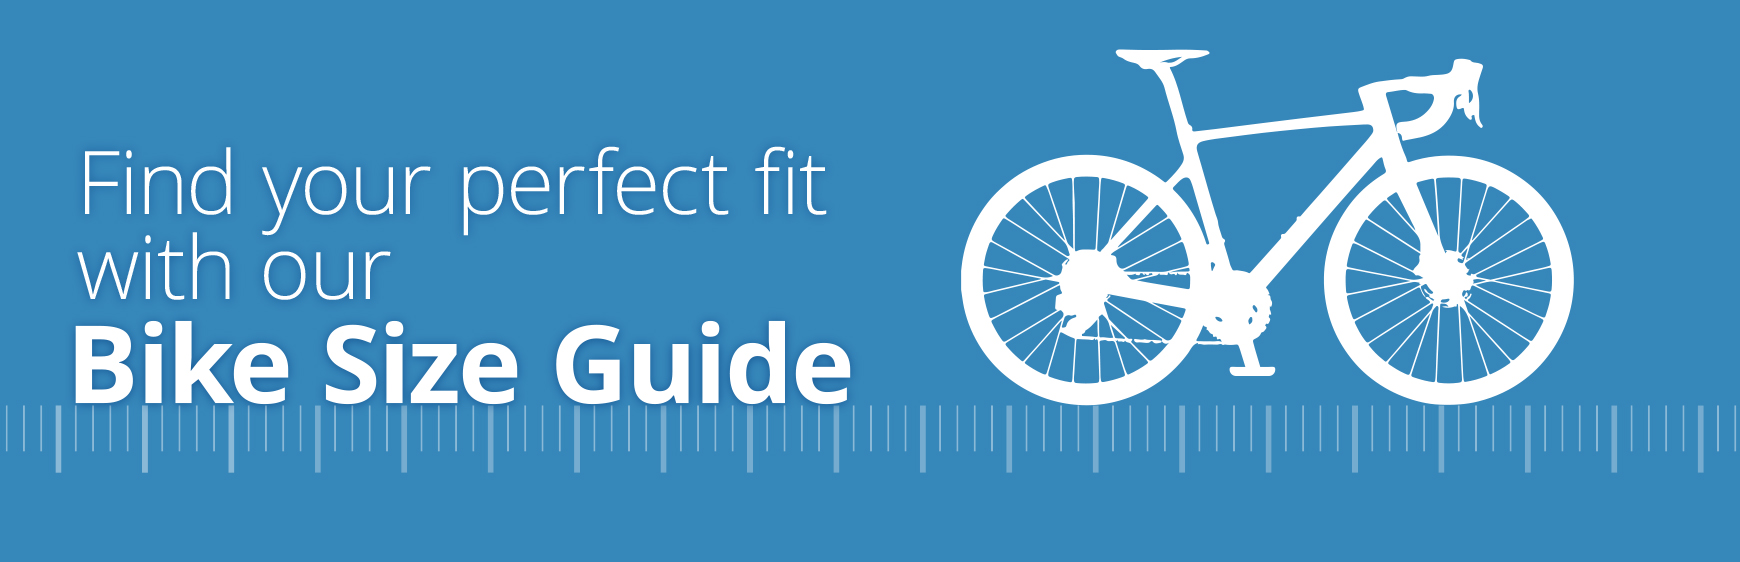 Bike Size Guide - Eurocycles.com